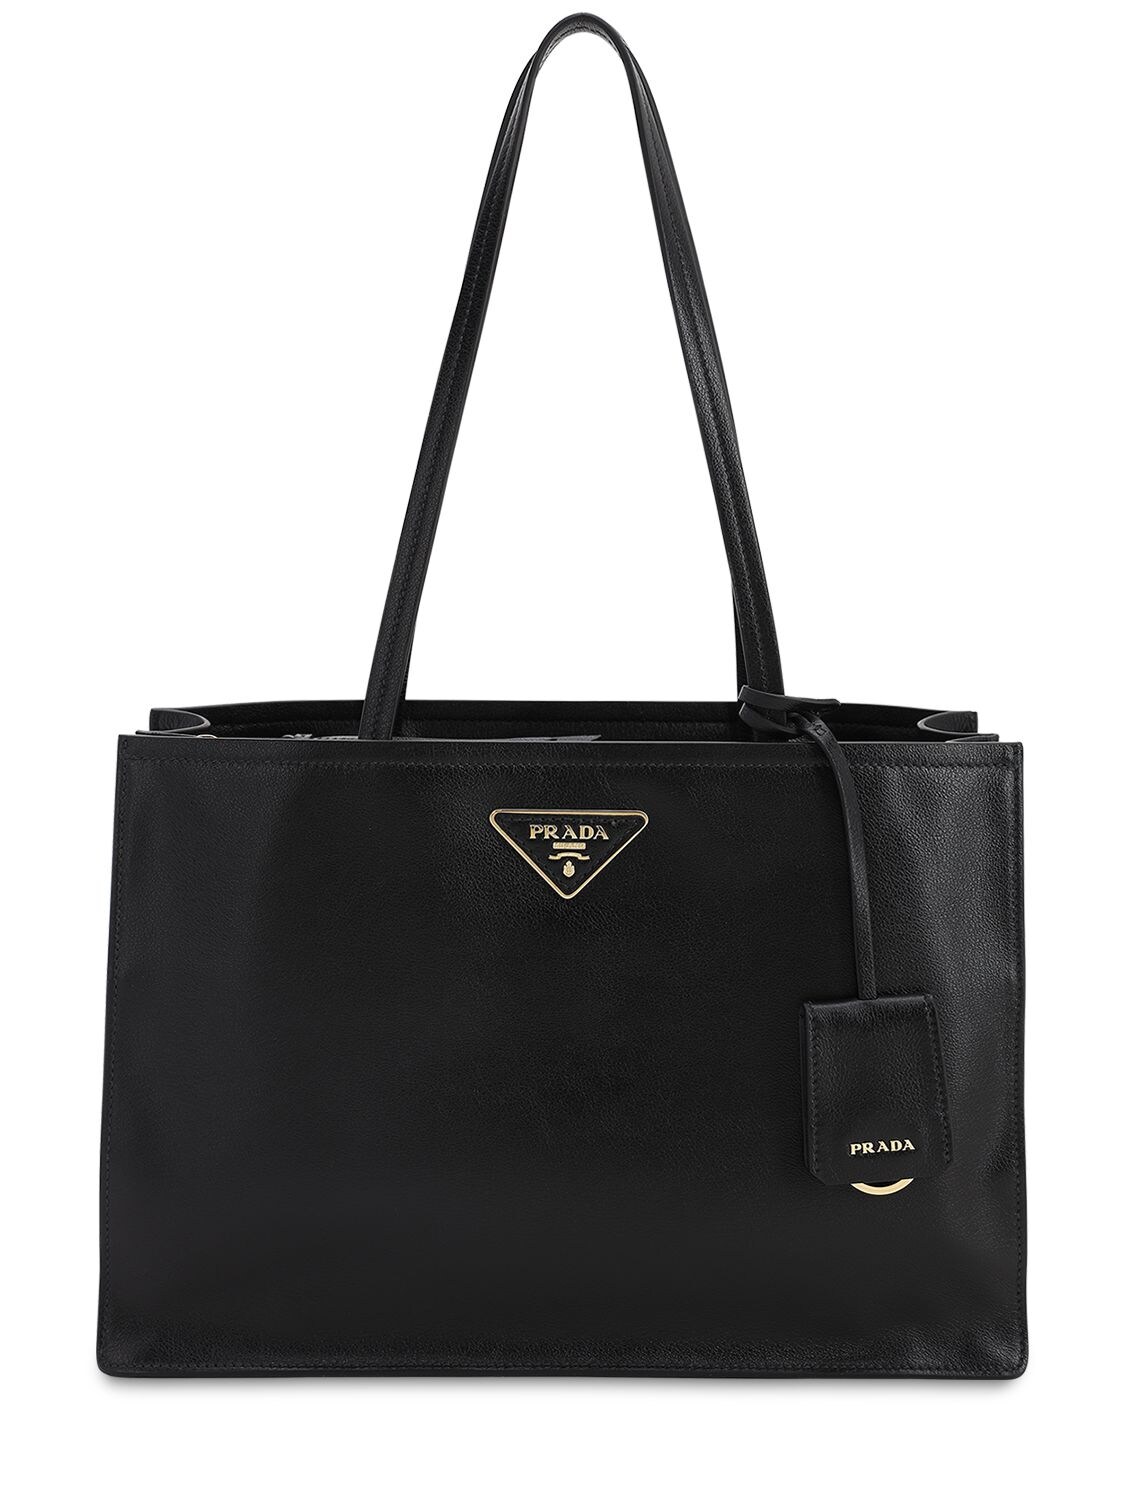 Prada Smooth Leather Tote Bag In Black